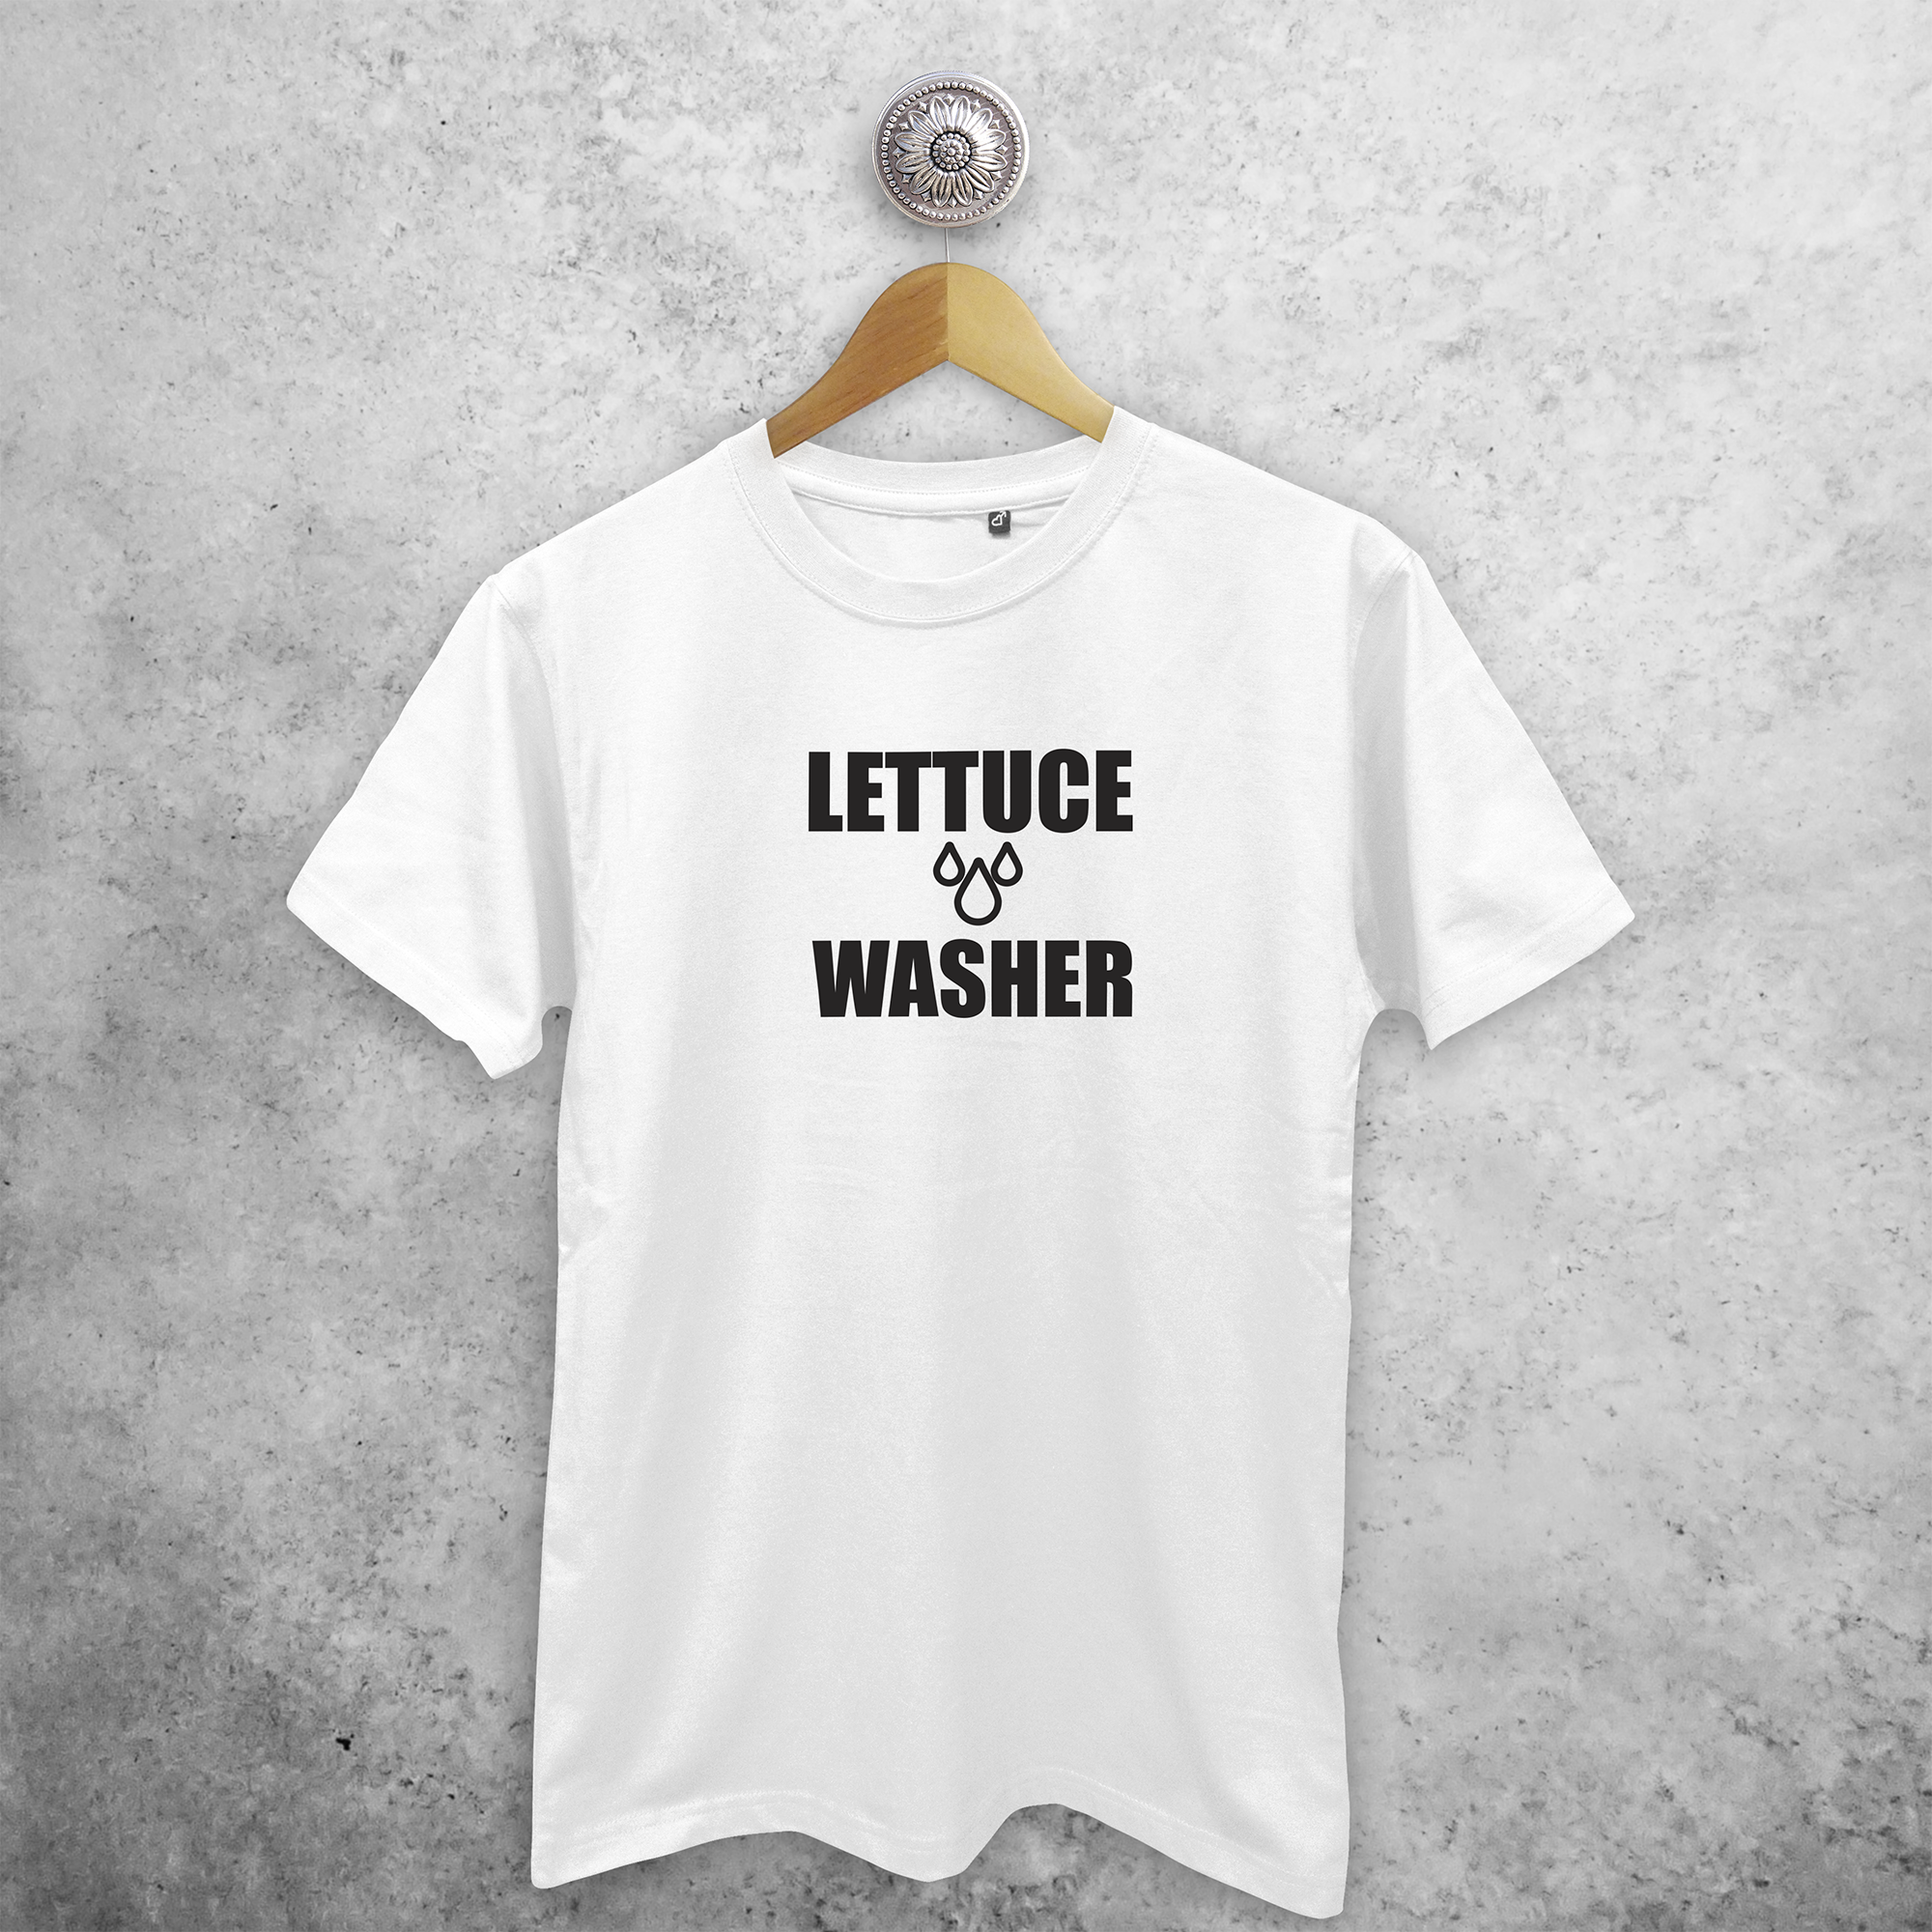 'Lettuce washer' volwassene shirt